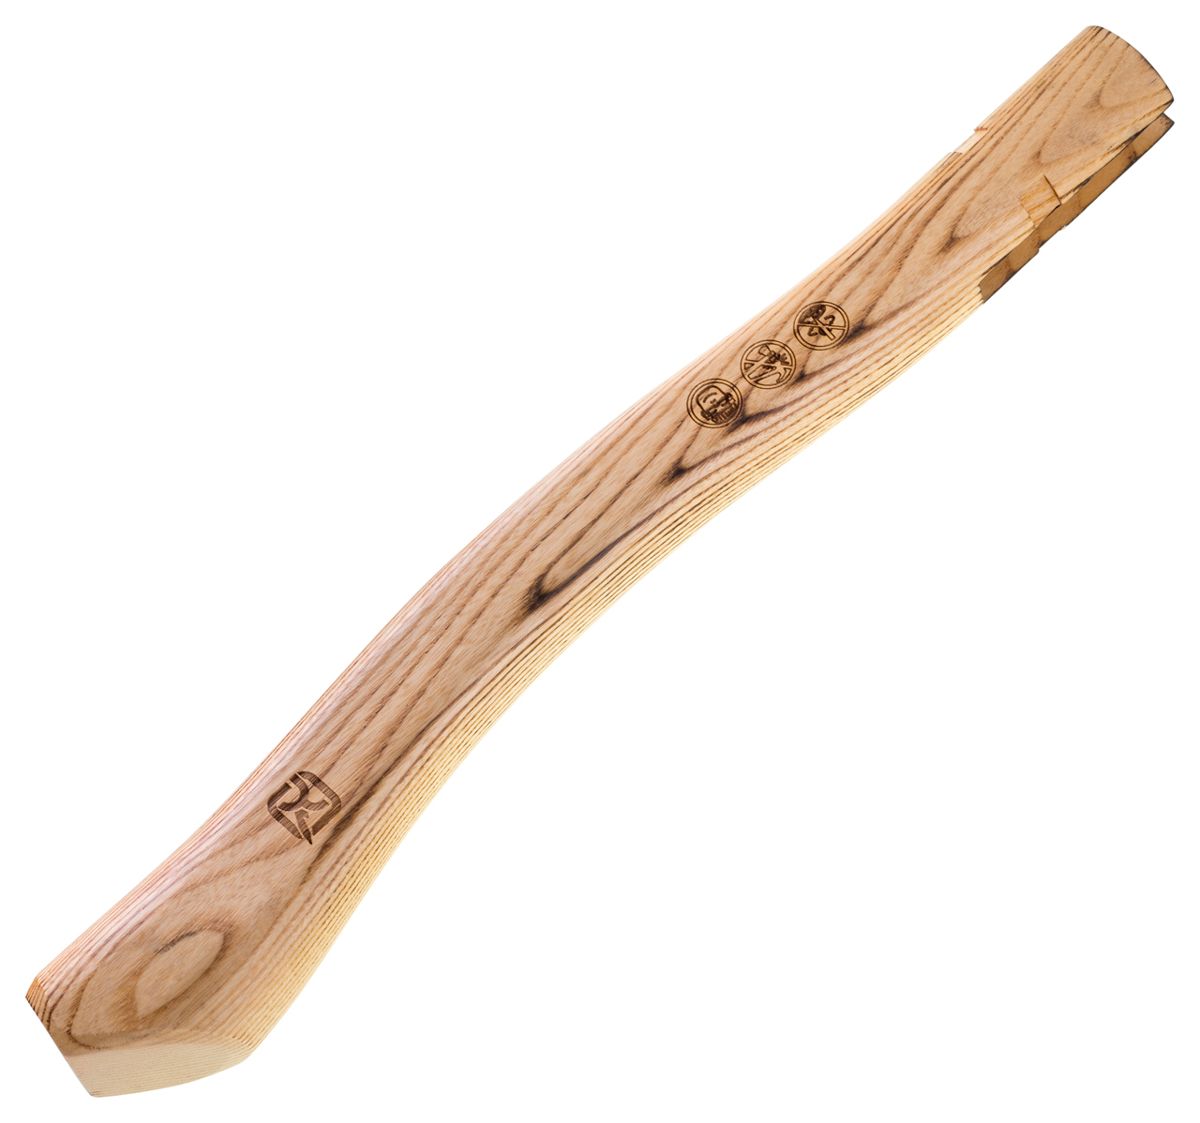 Klecker traditional handle